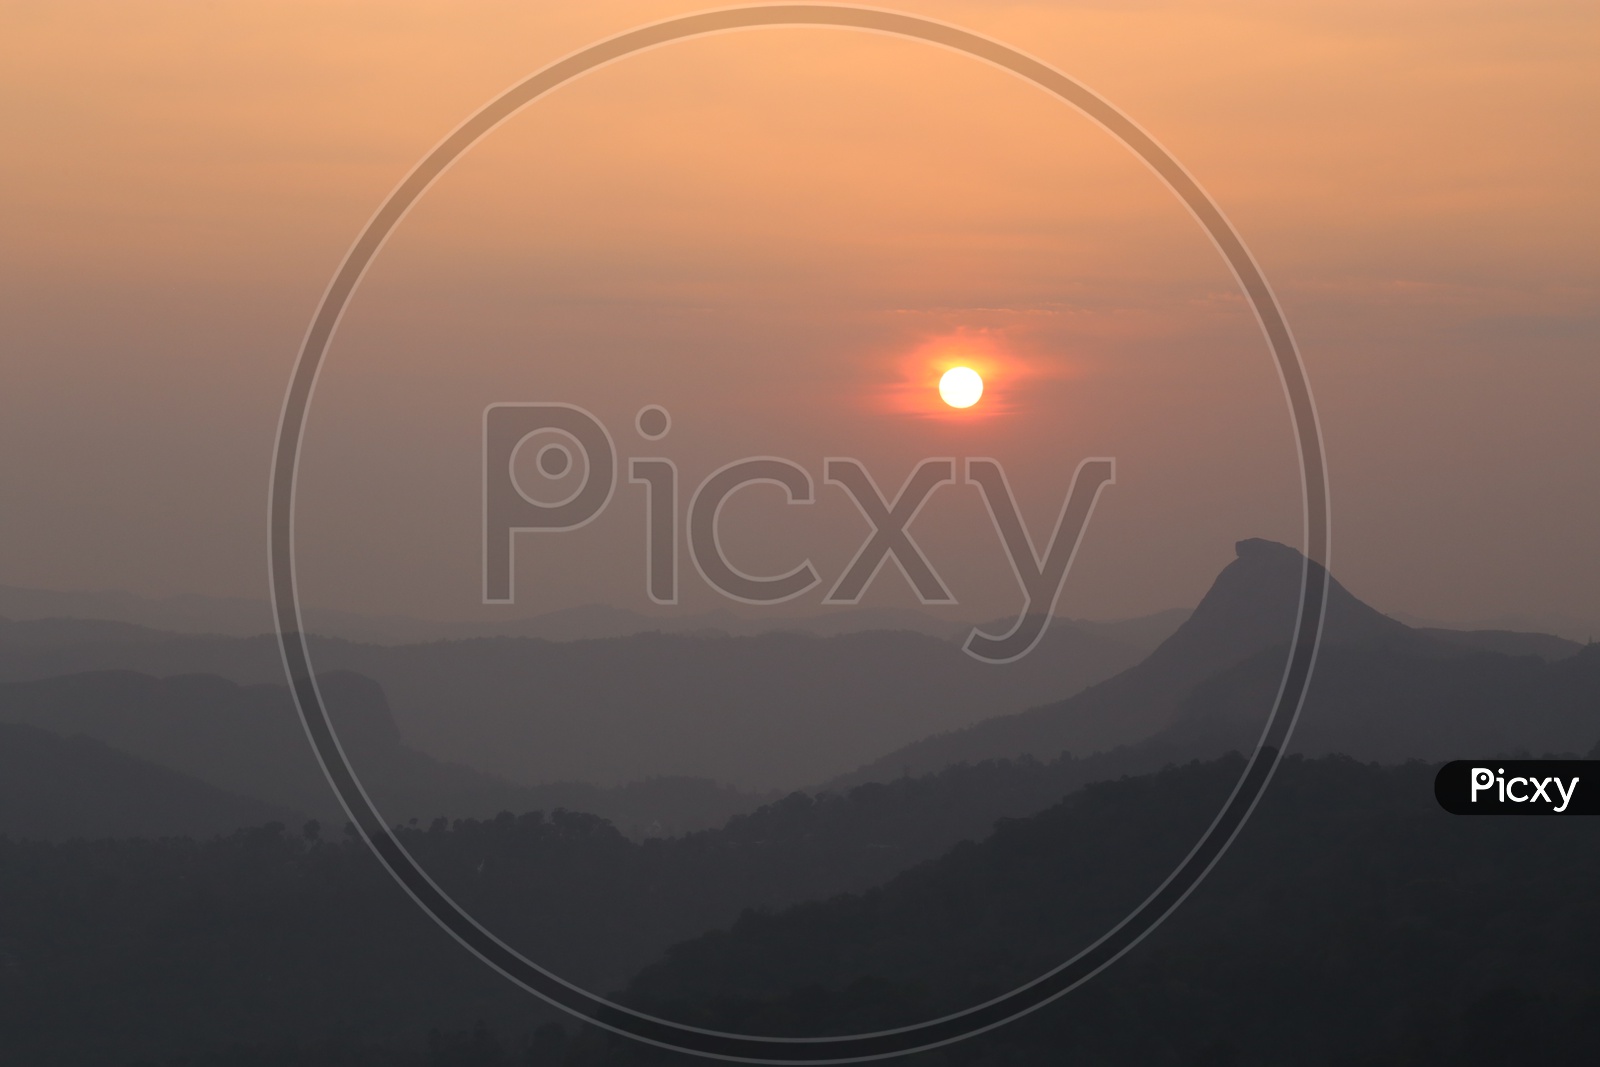 Beautiful landscape of  Sunrise in Munnar,Kerala, India